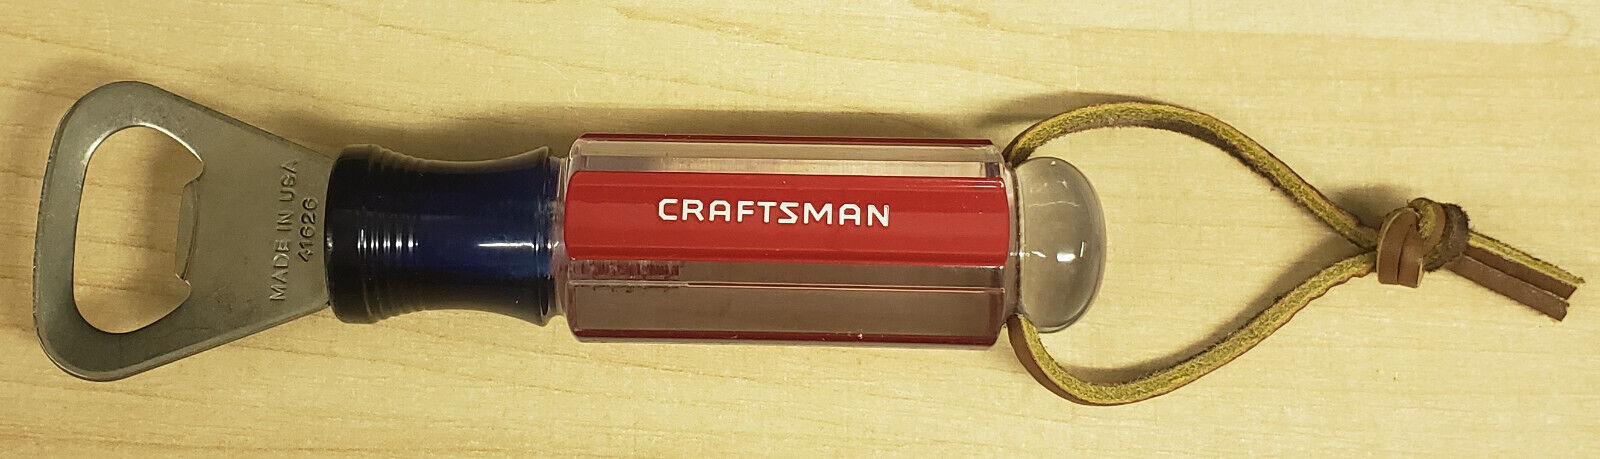 Craftsman Screwdriver Handle Bottle Opener ~Stainless Steel 41626 USA  